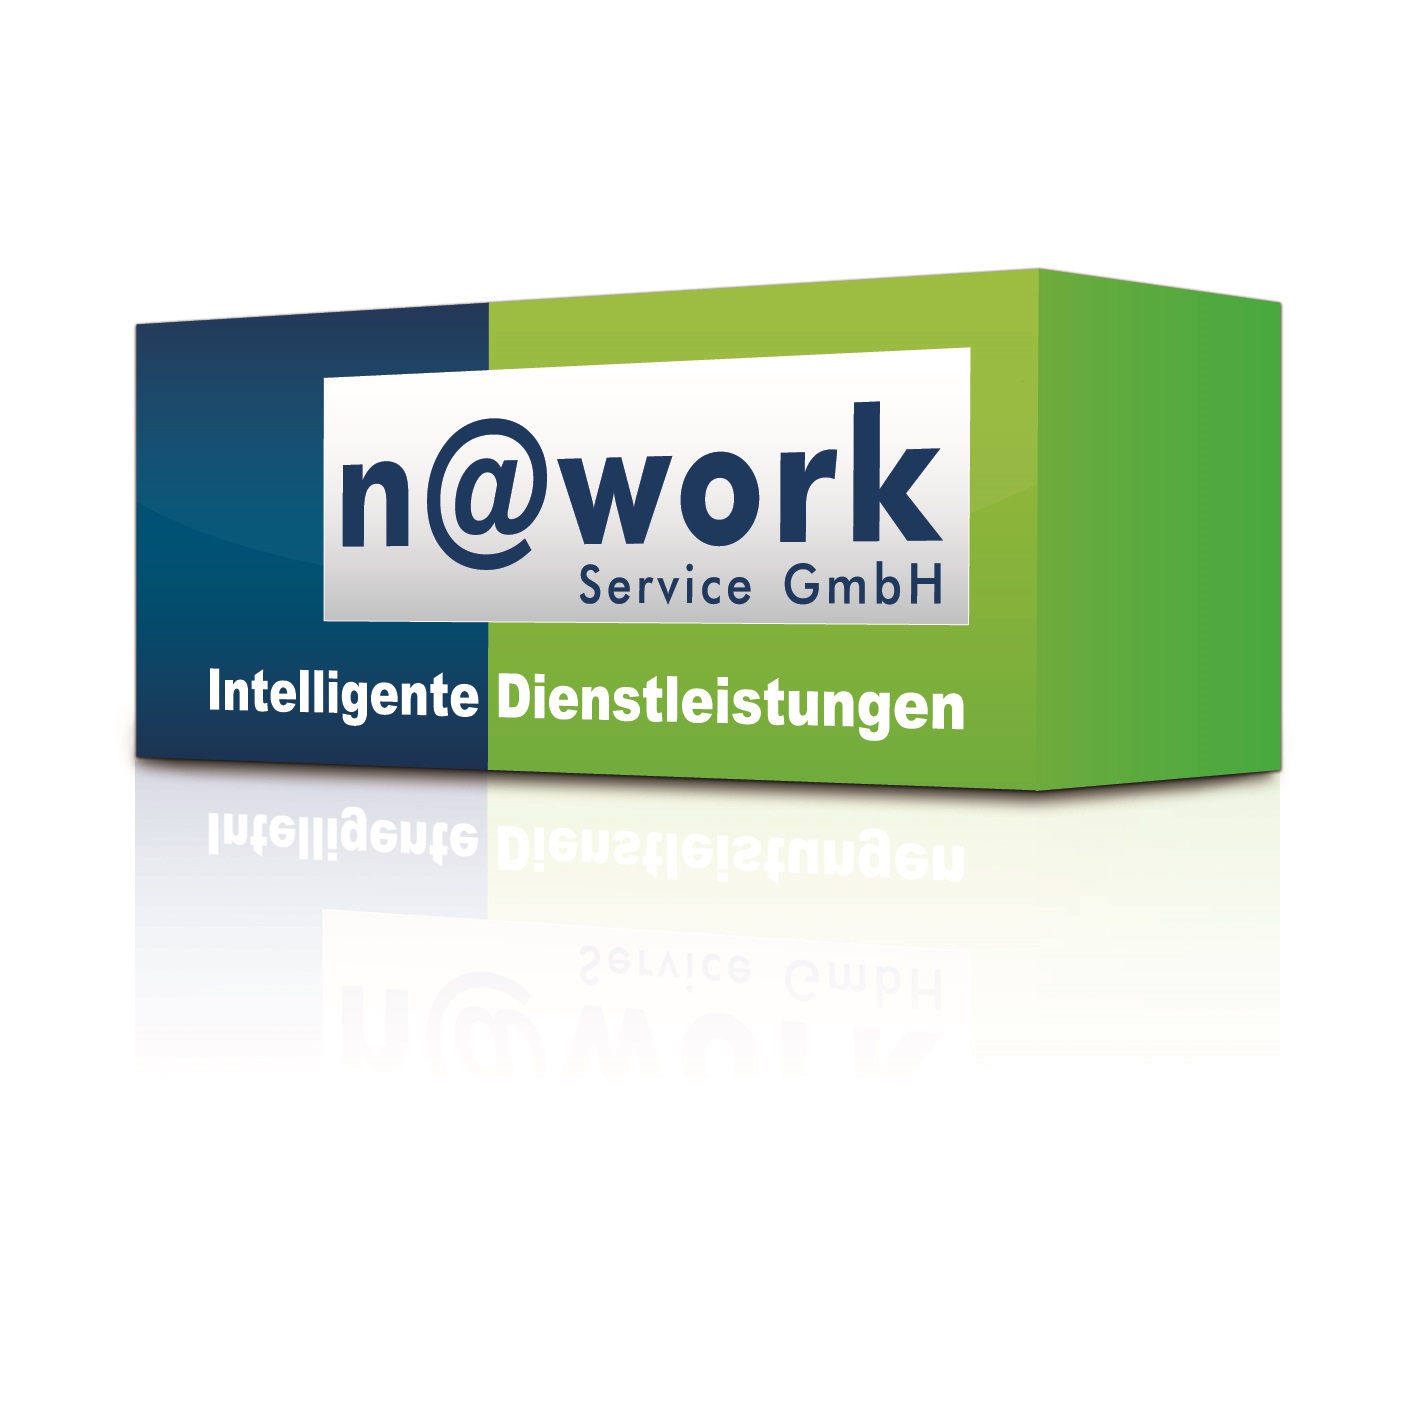 The logo of n@work